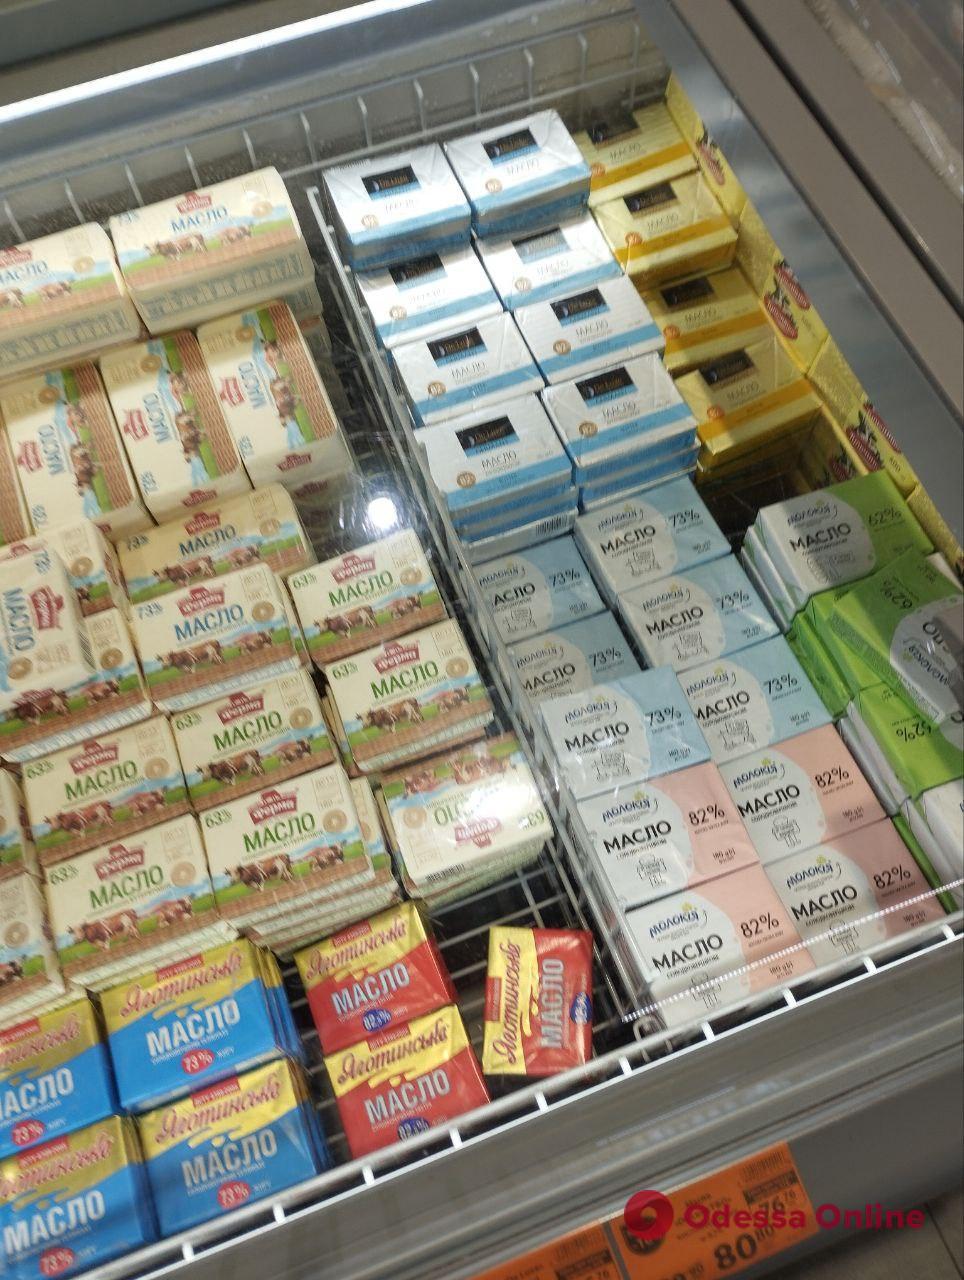 Яйца, курица и сахар: обзор цен в одесских супермаркетах